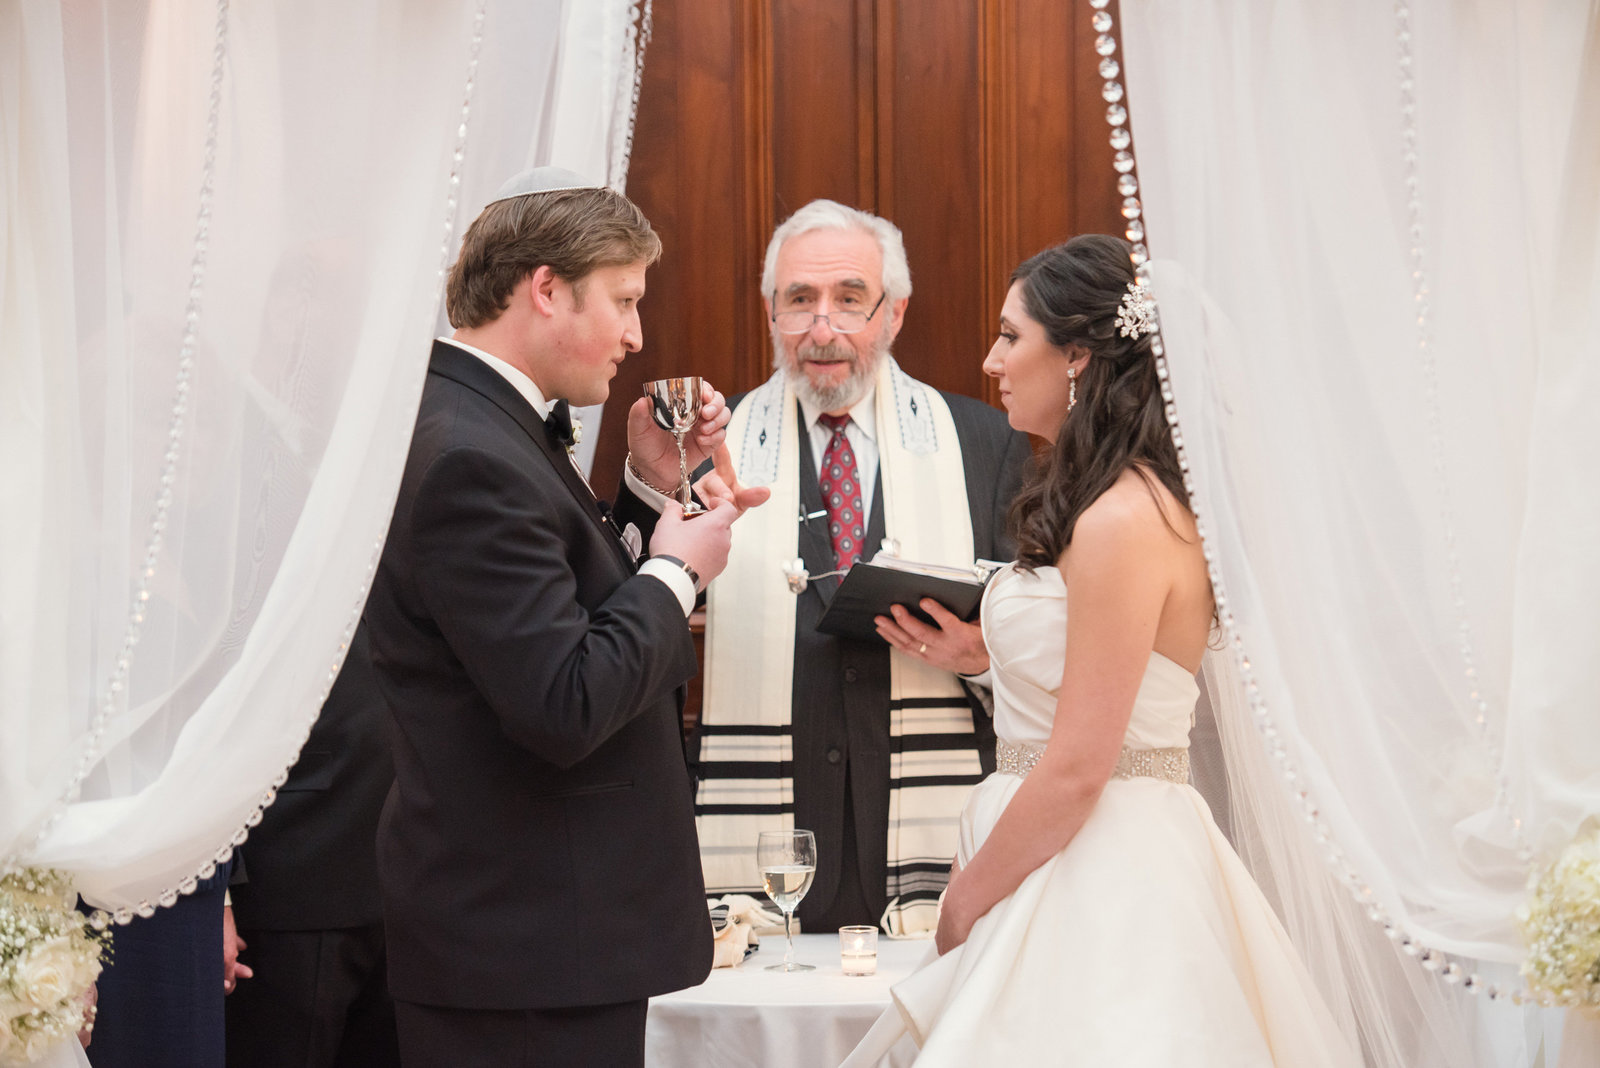 Jewish wedding ceremony at Bourne Mansion